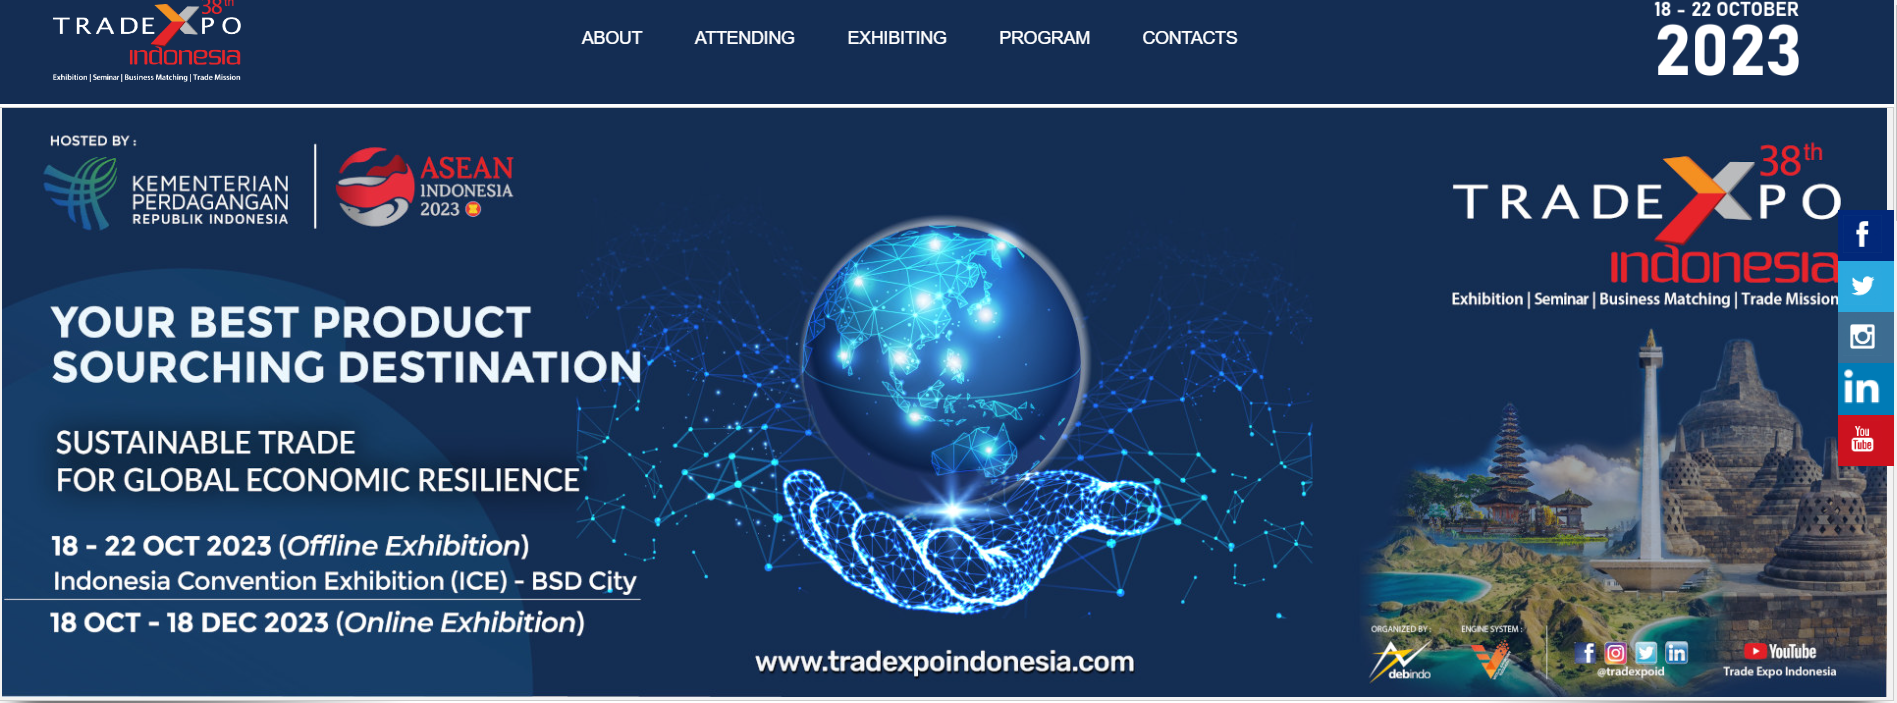 Gambar Trade Expo Indonesia 2023